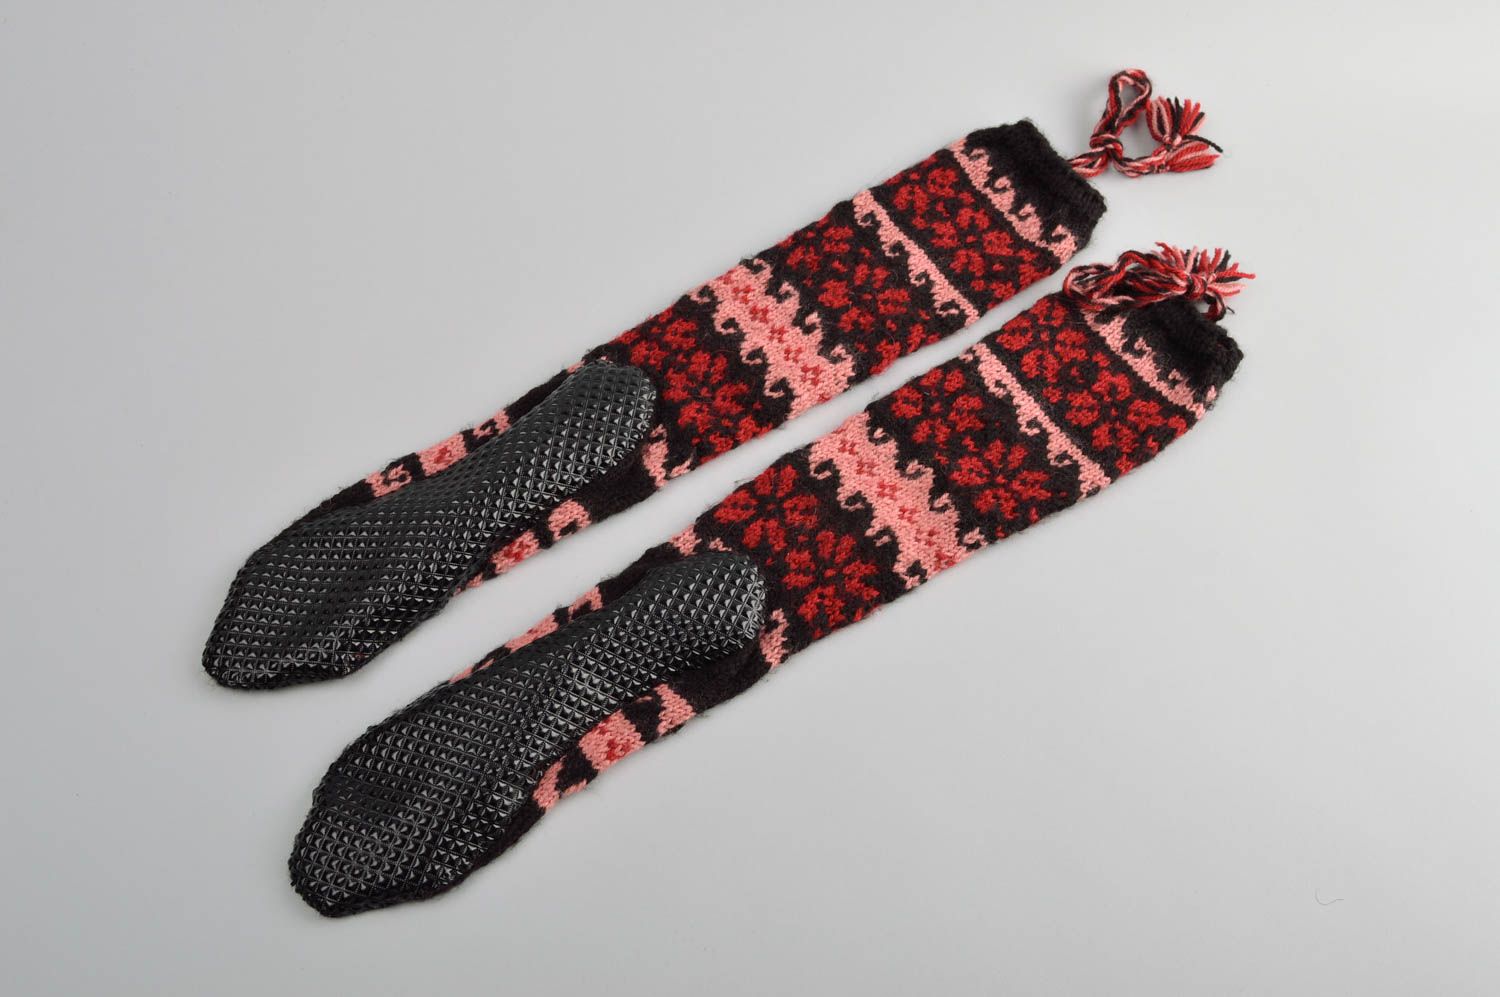 Handmade woolen warm socks unusual winter socks stylish winter accessory photo 3